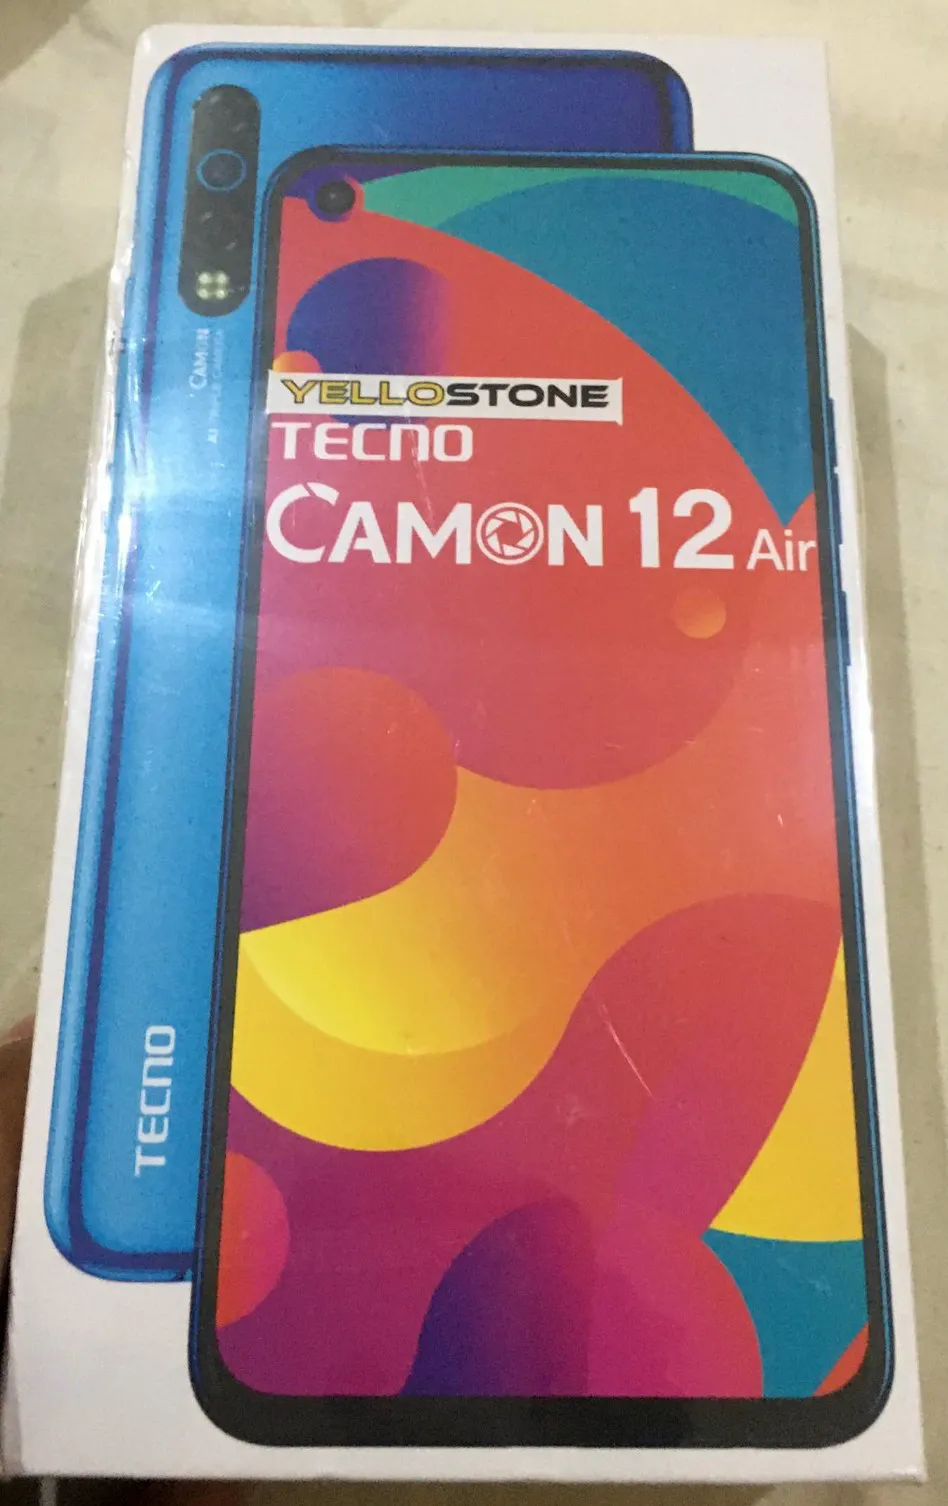 Tecno Camon 12 Air Stellar Purple Color PTA Approved - photo 1